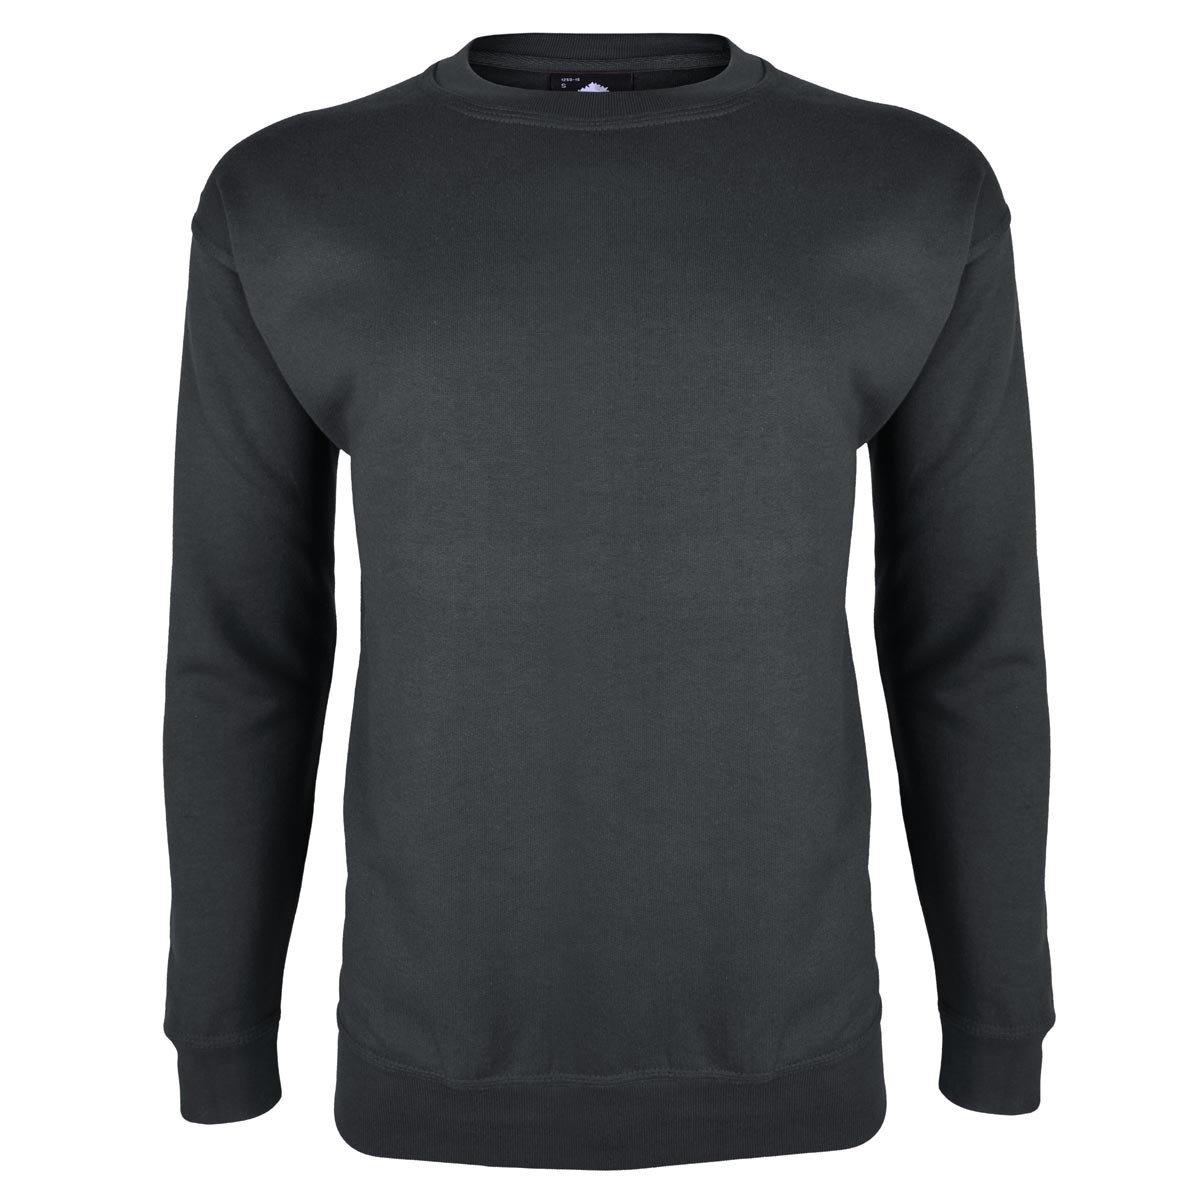 Kitrose Sweat Shirt Men's Sweat Shirt Image Charcoal S 